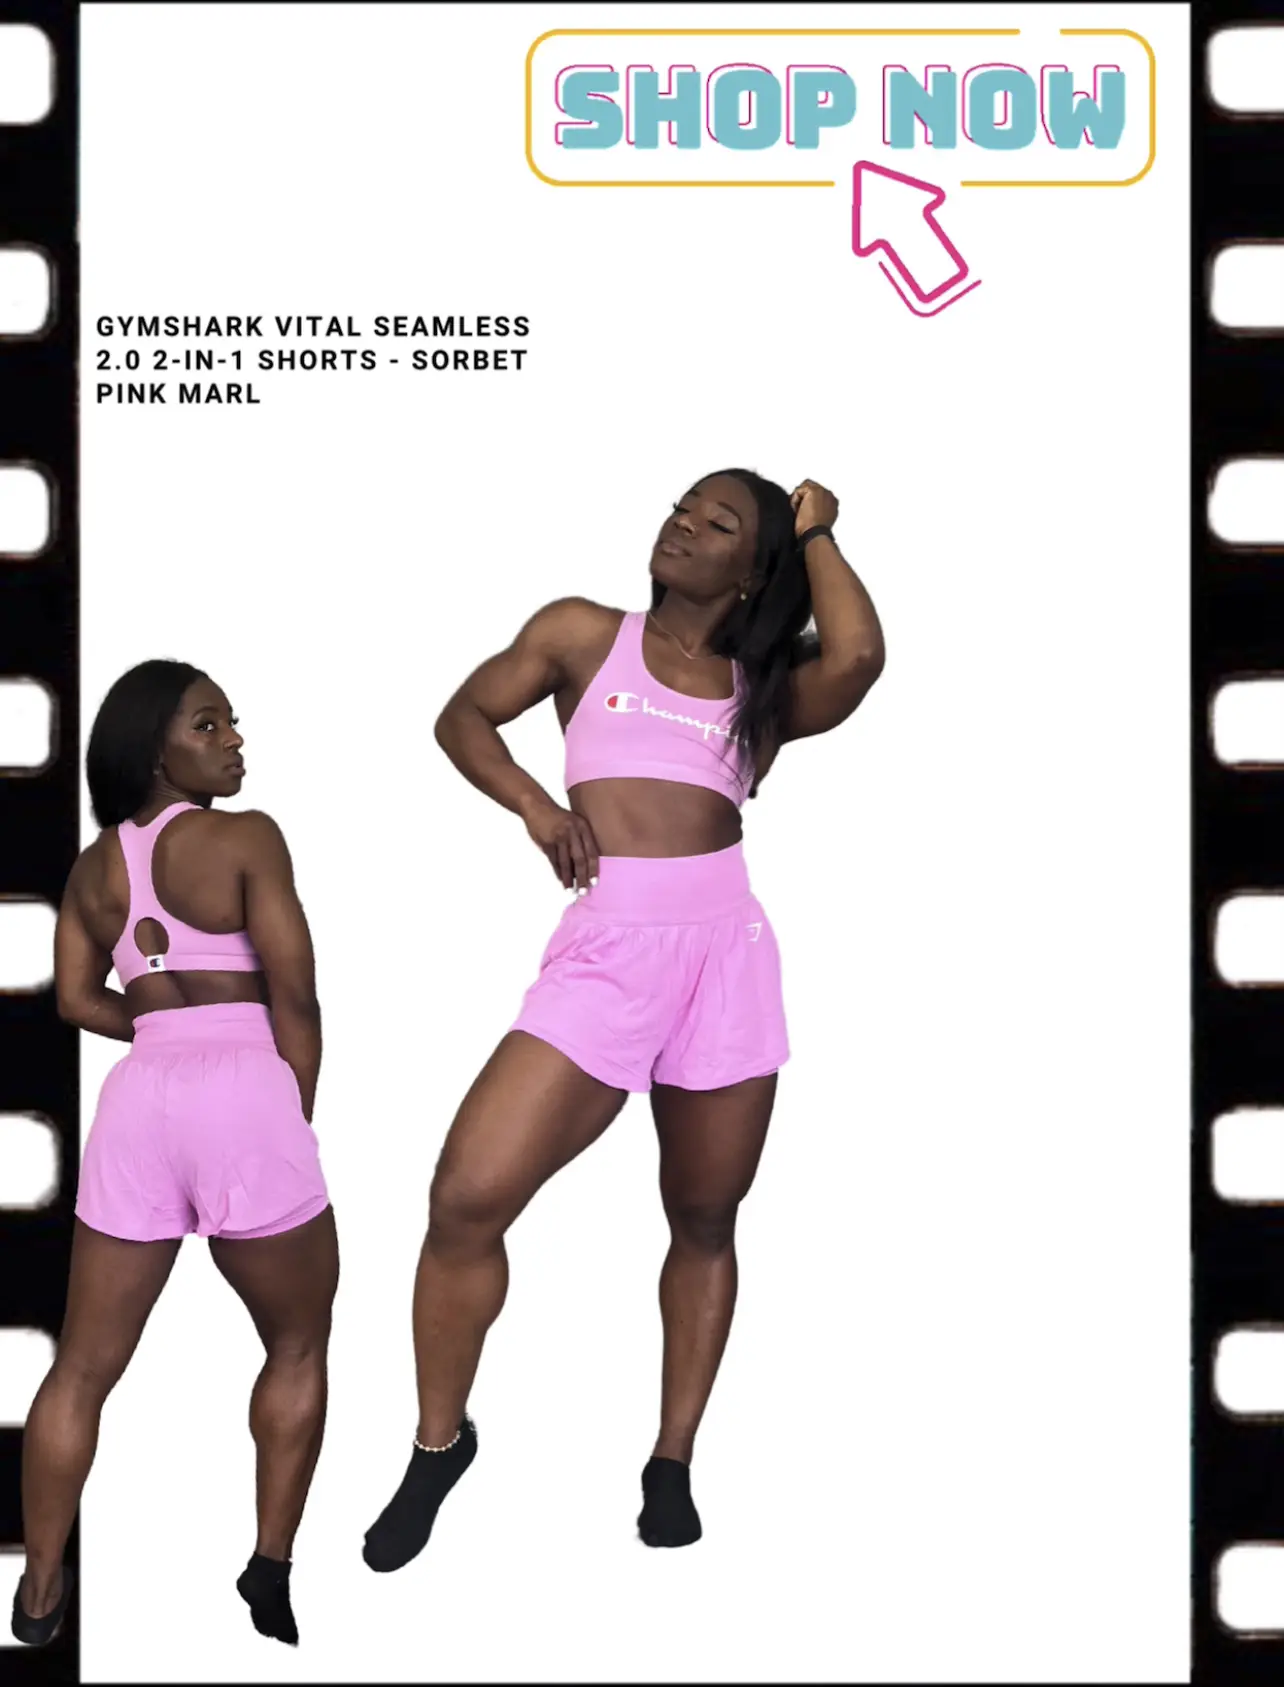 Gymshark Vital Seamless 2.0 2-in-1 Shorts - Sorbet Pink Marl